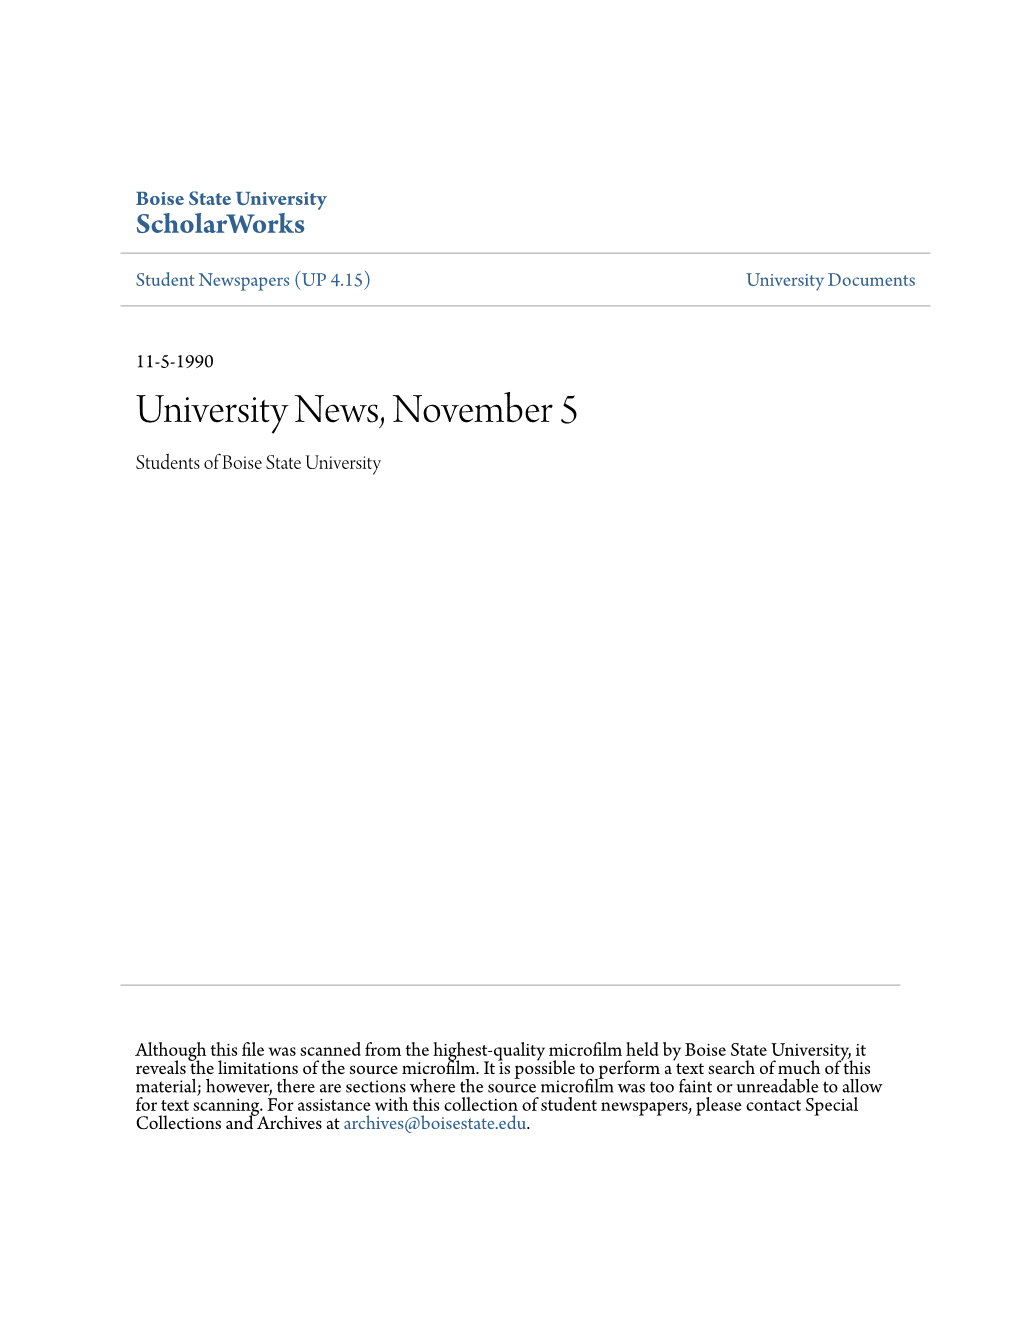 University News, November 5 Students of Boise State University